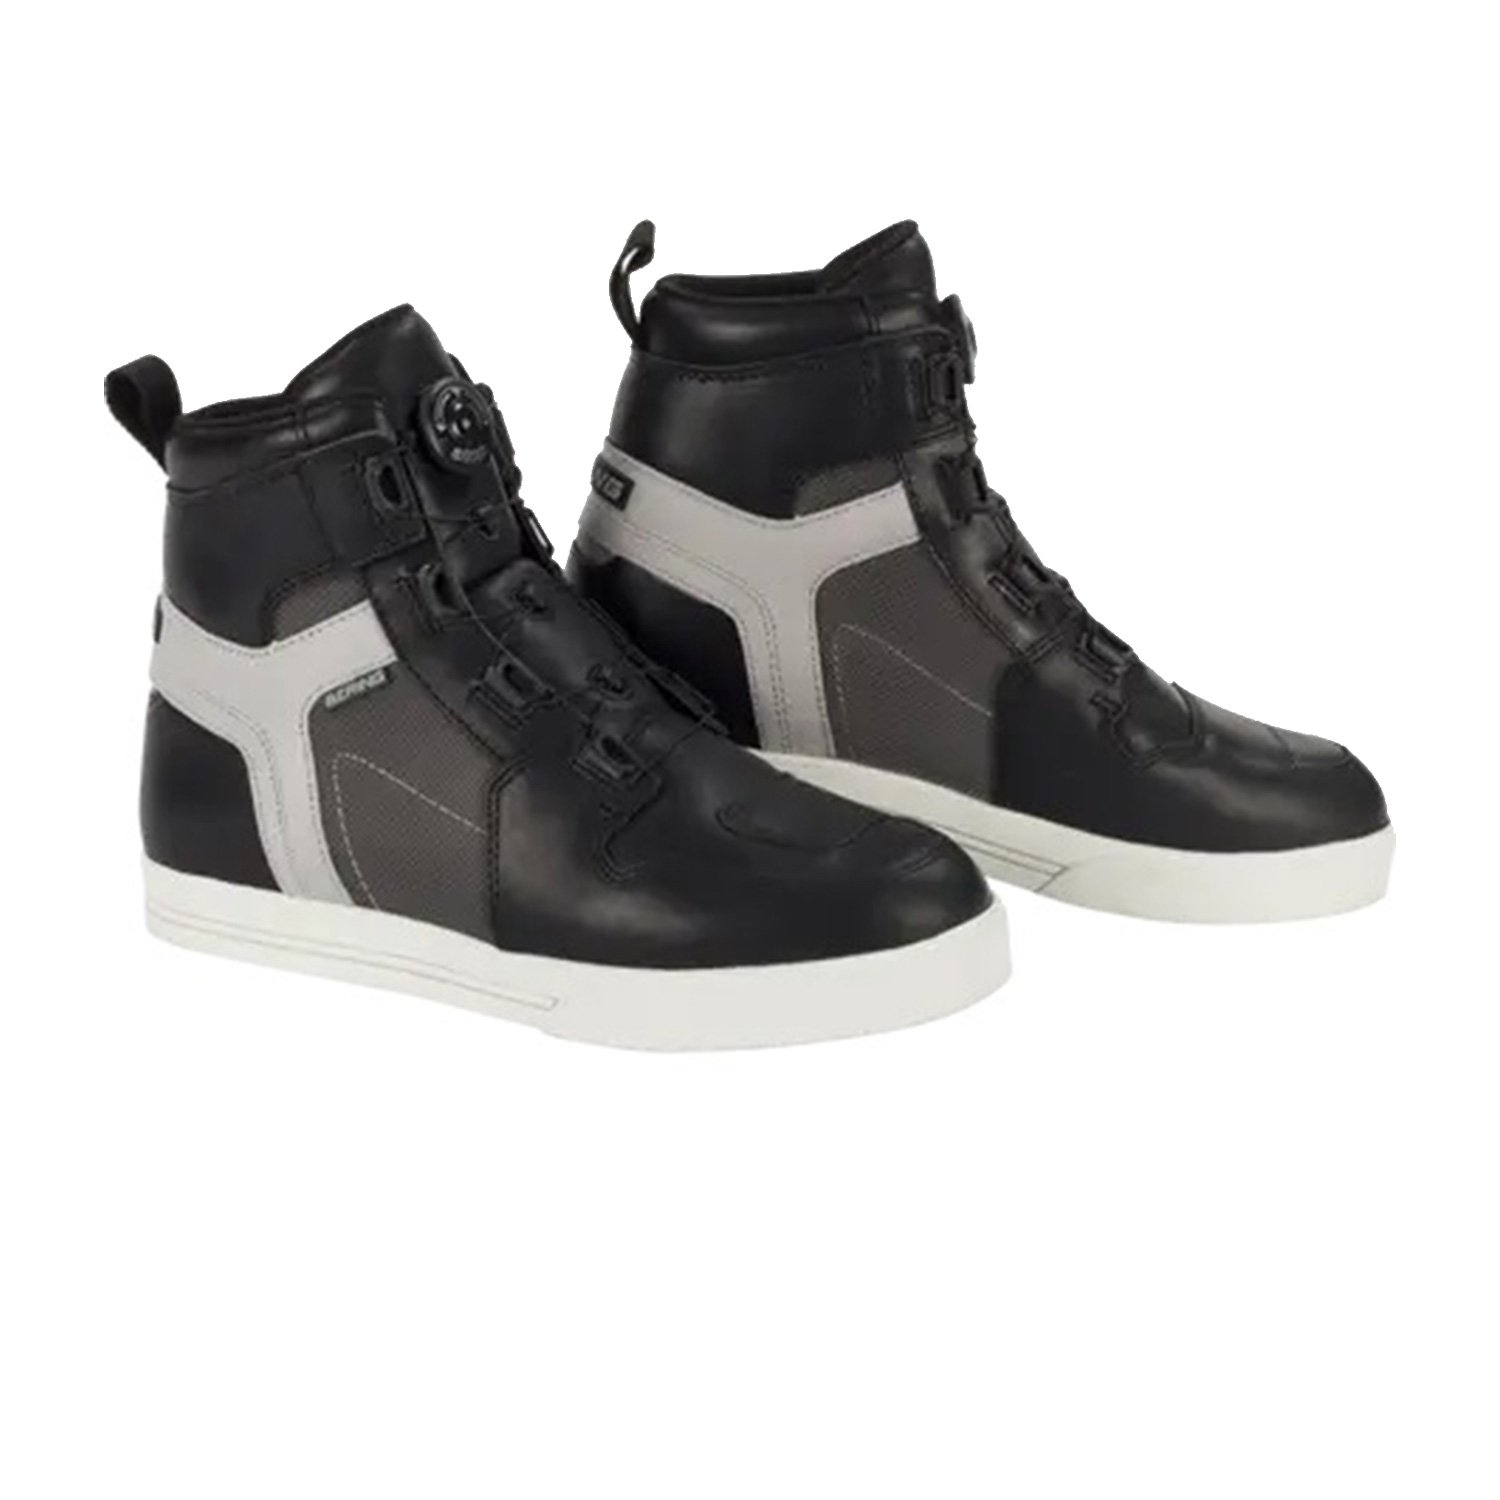 Image of Bering Sneakers Reflex Vented Black Grey Talla 41